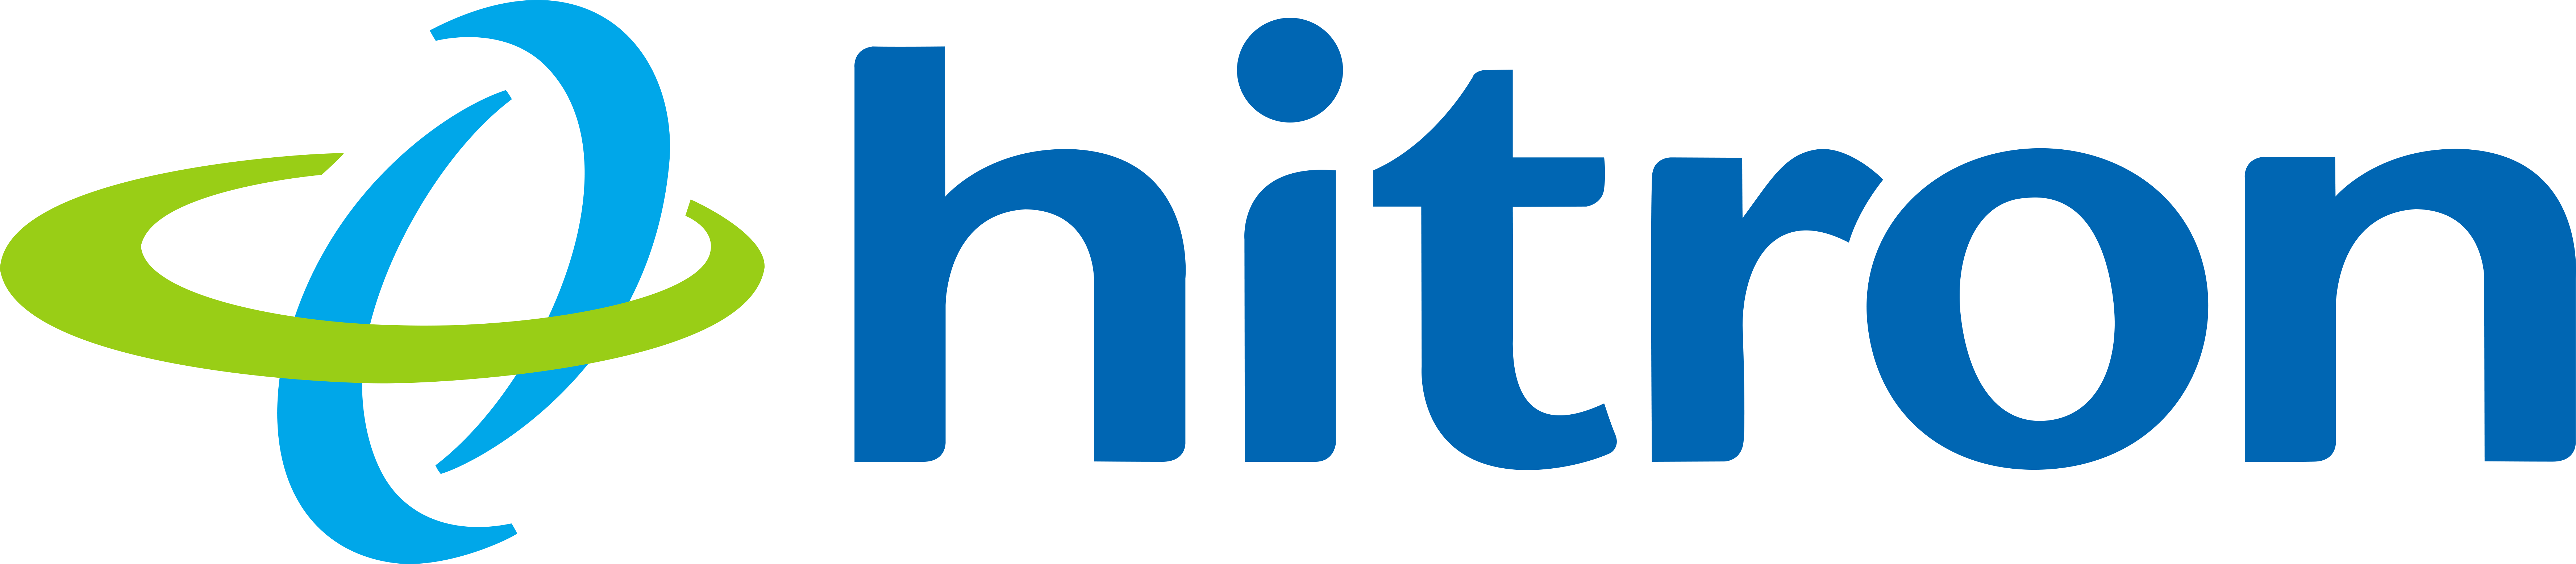 Hitron logo